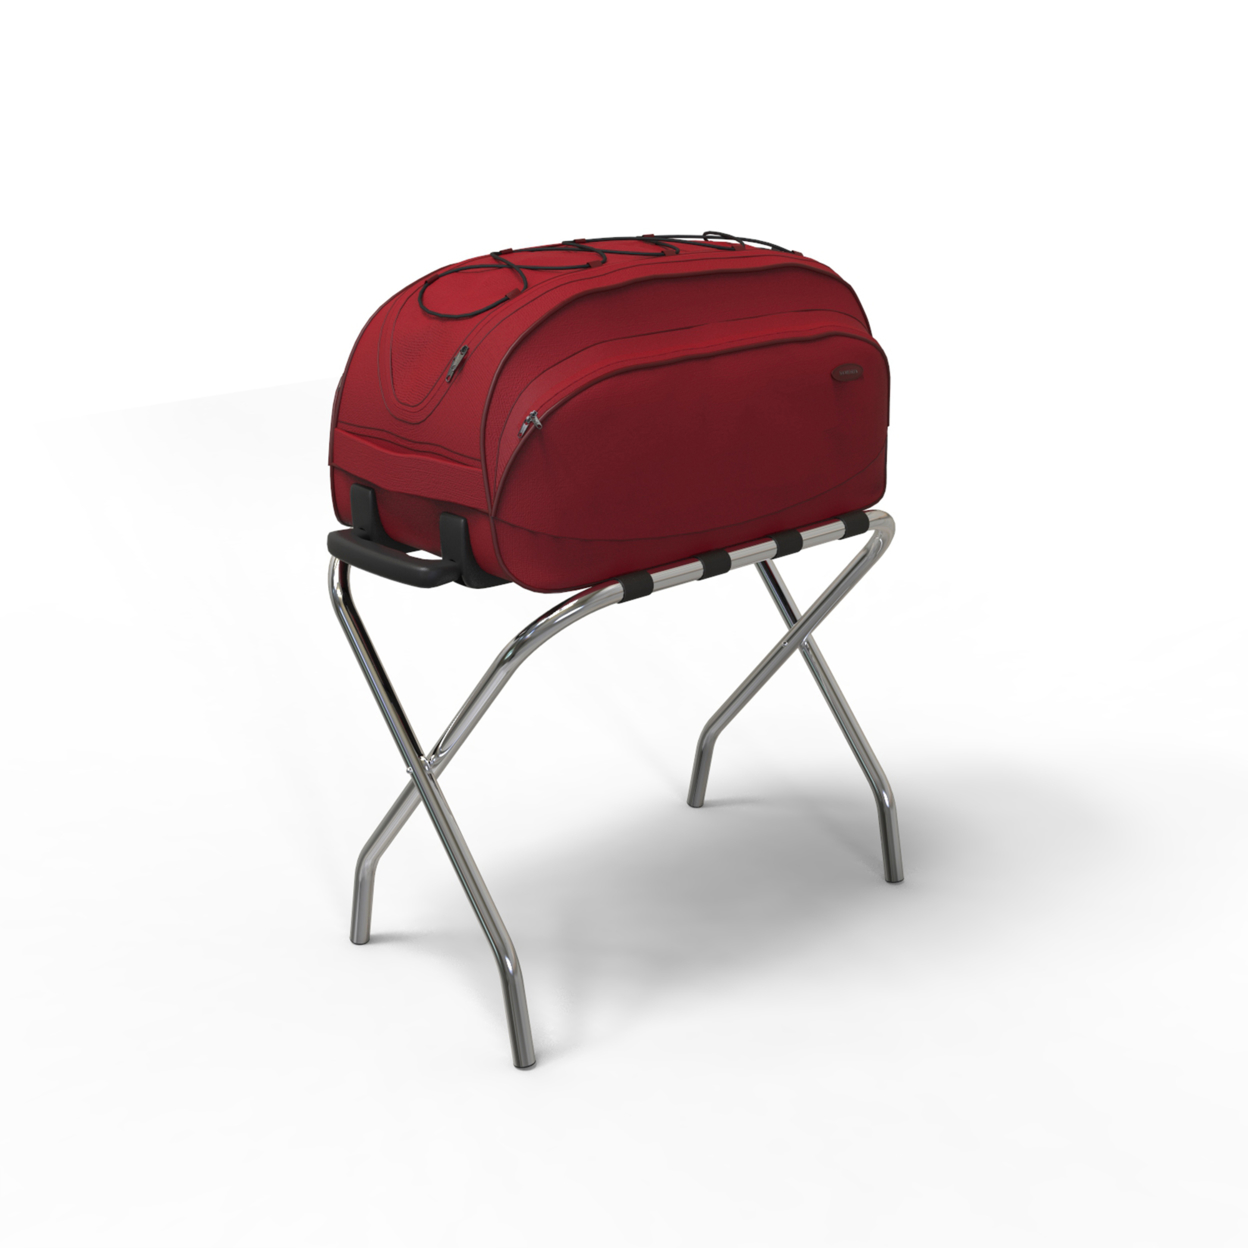 Chrome Luggage Rack Folding Suitcase Stand Travel Bag Holder Easy Store